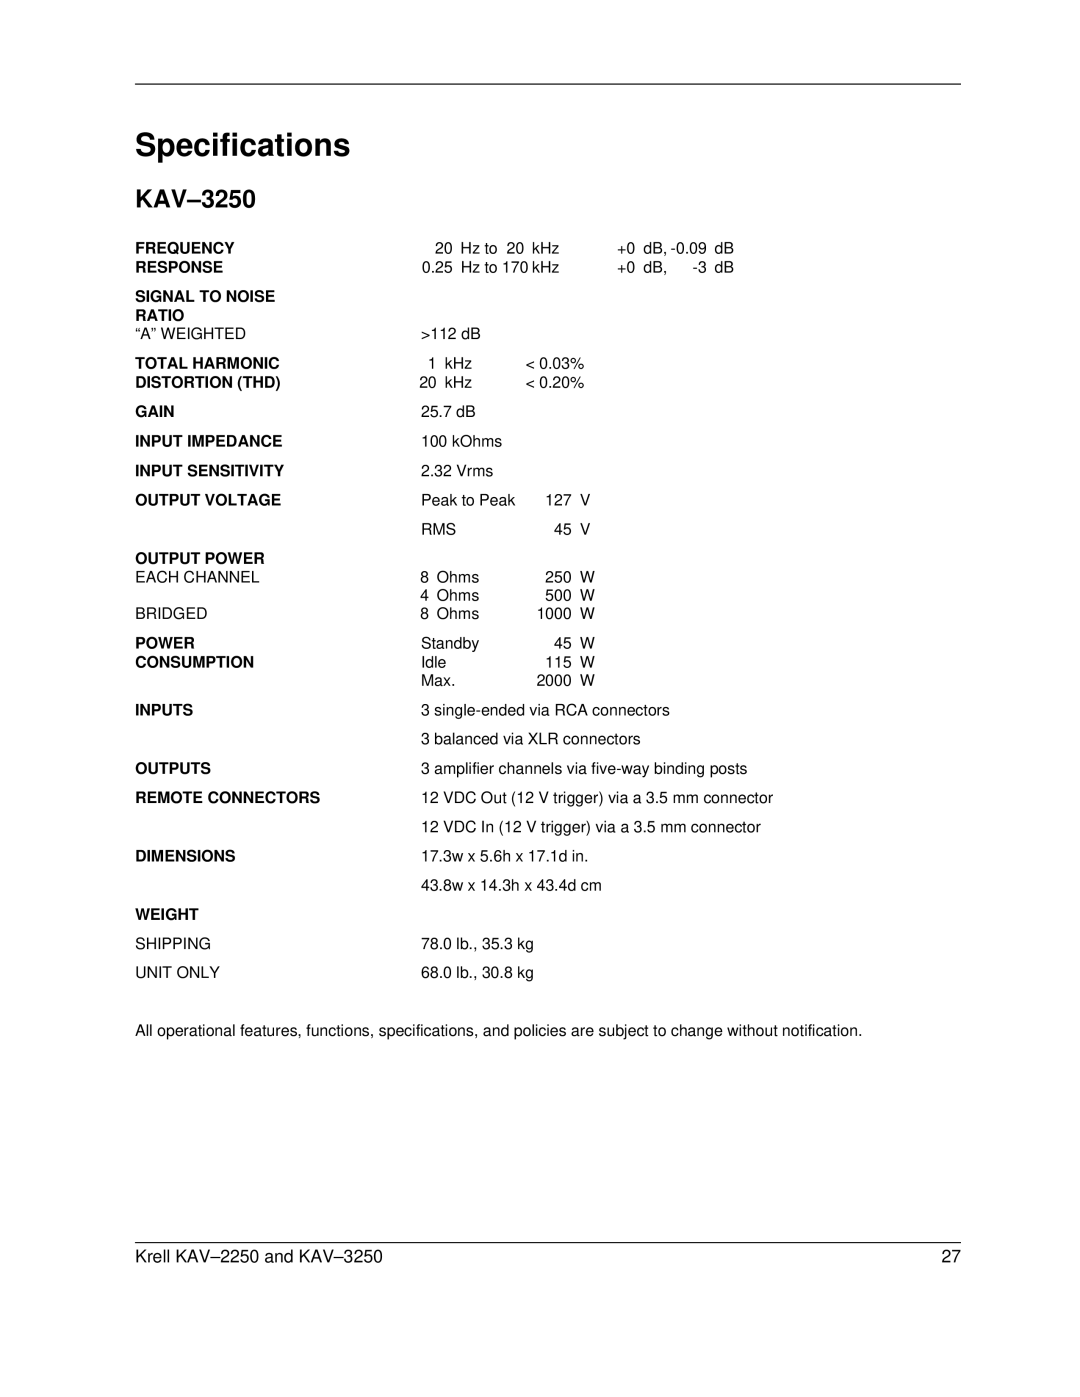 Krell Industries KAV 3250, KAV2250 manual Specifications, Krell KAV-2250 and KAV-3250, 17.3w x 5.6h x 17.1d in 